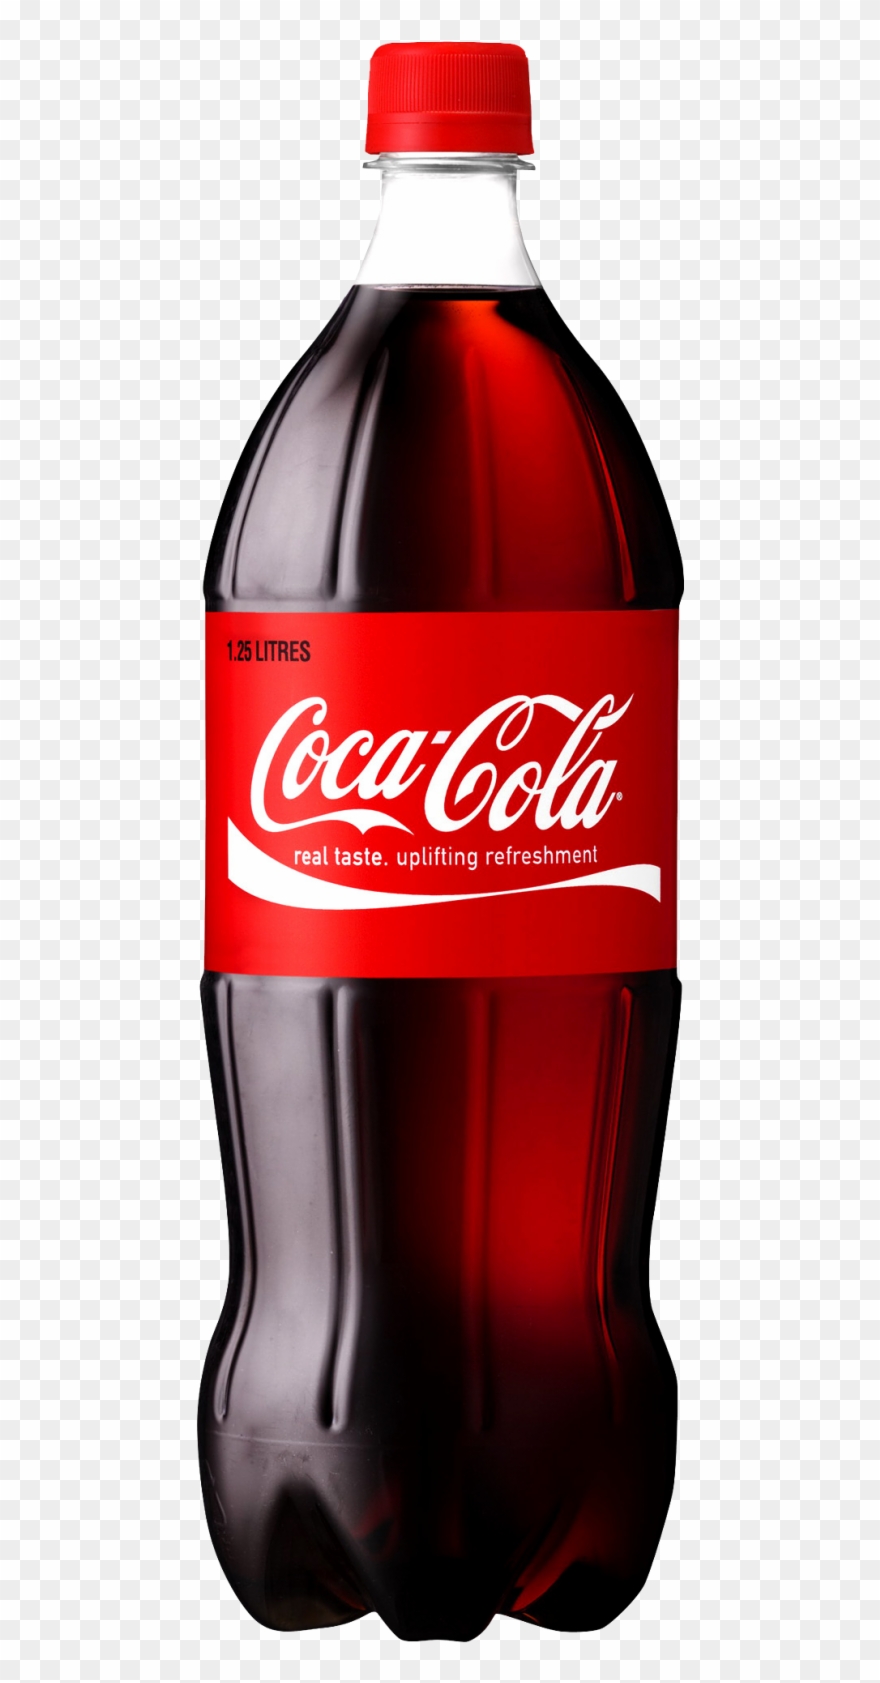 Download Coca Cola Png Image.